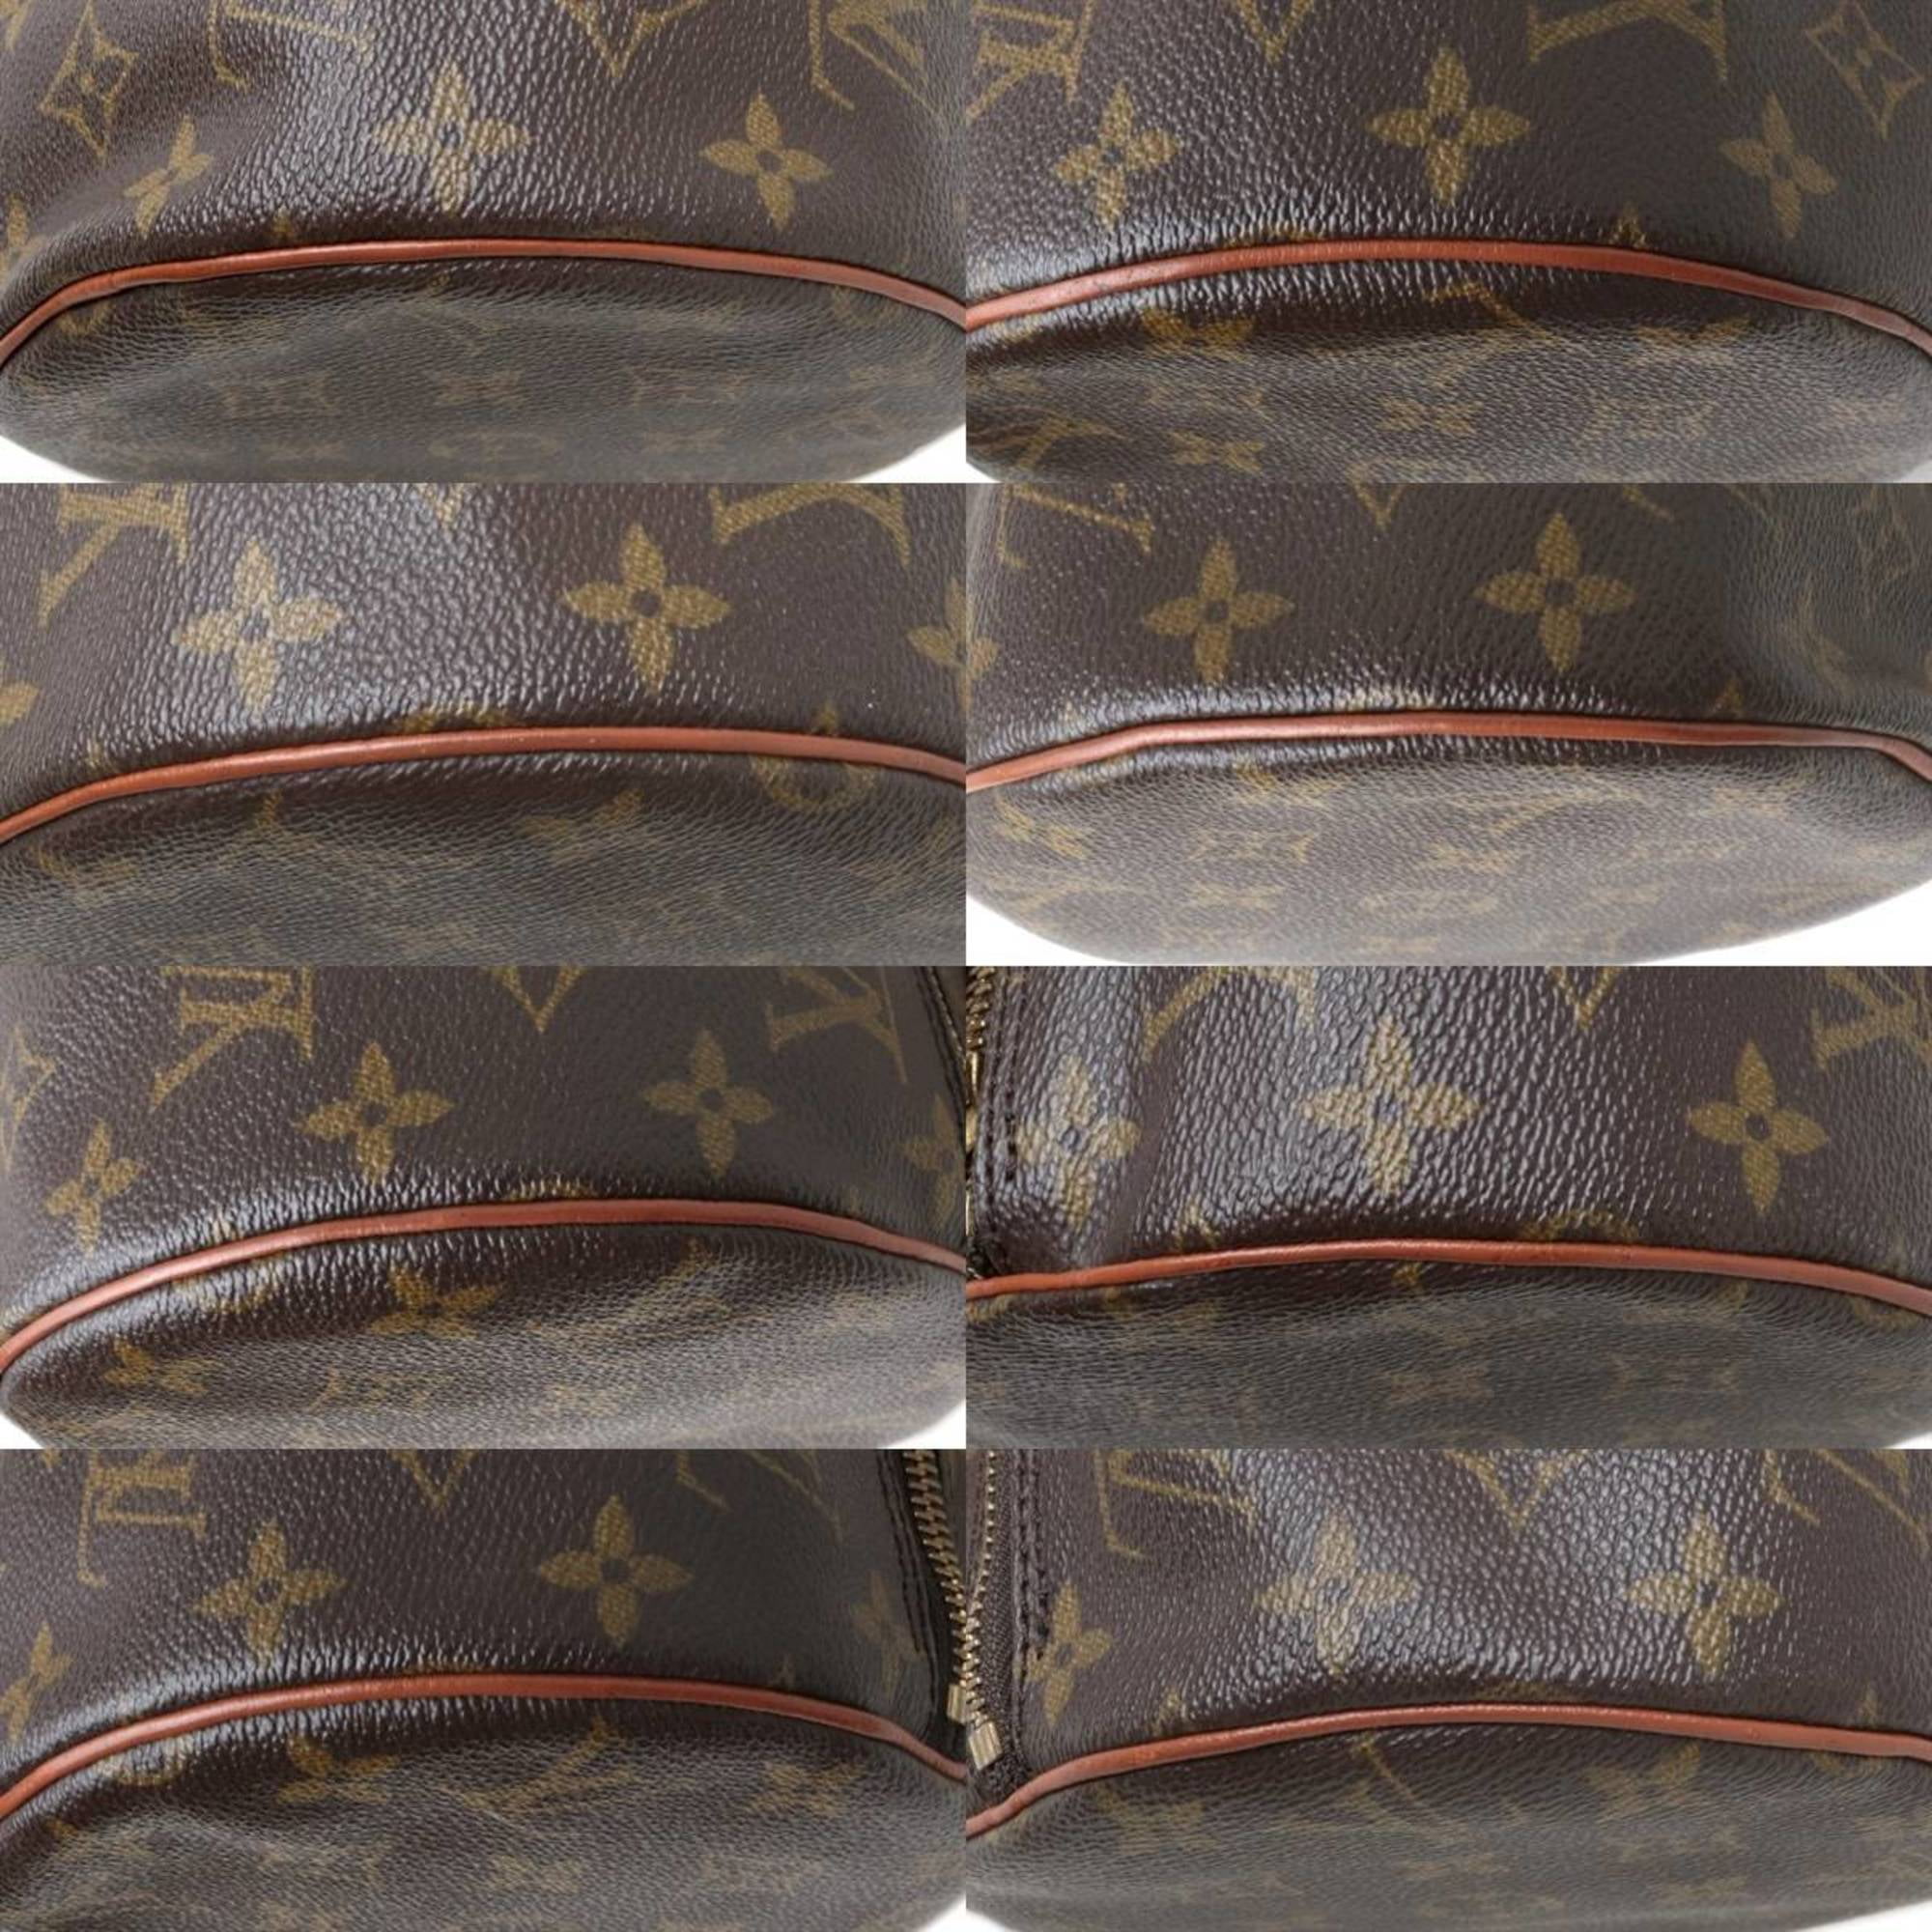 Used Louis Vuitton Handbag/Leather/Brw/Whole Pattern/M51365 Bag